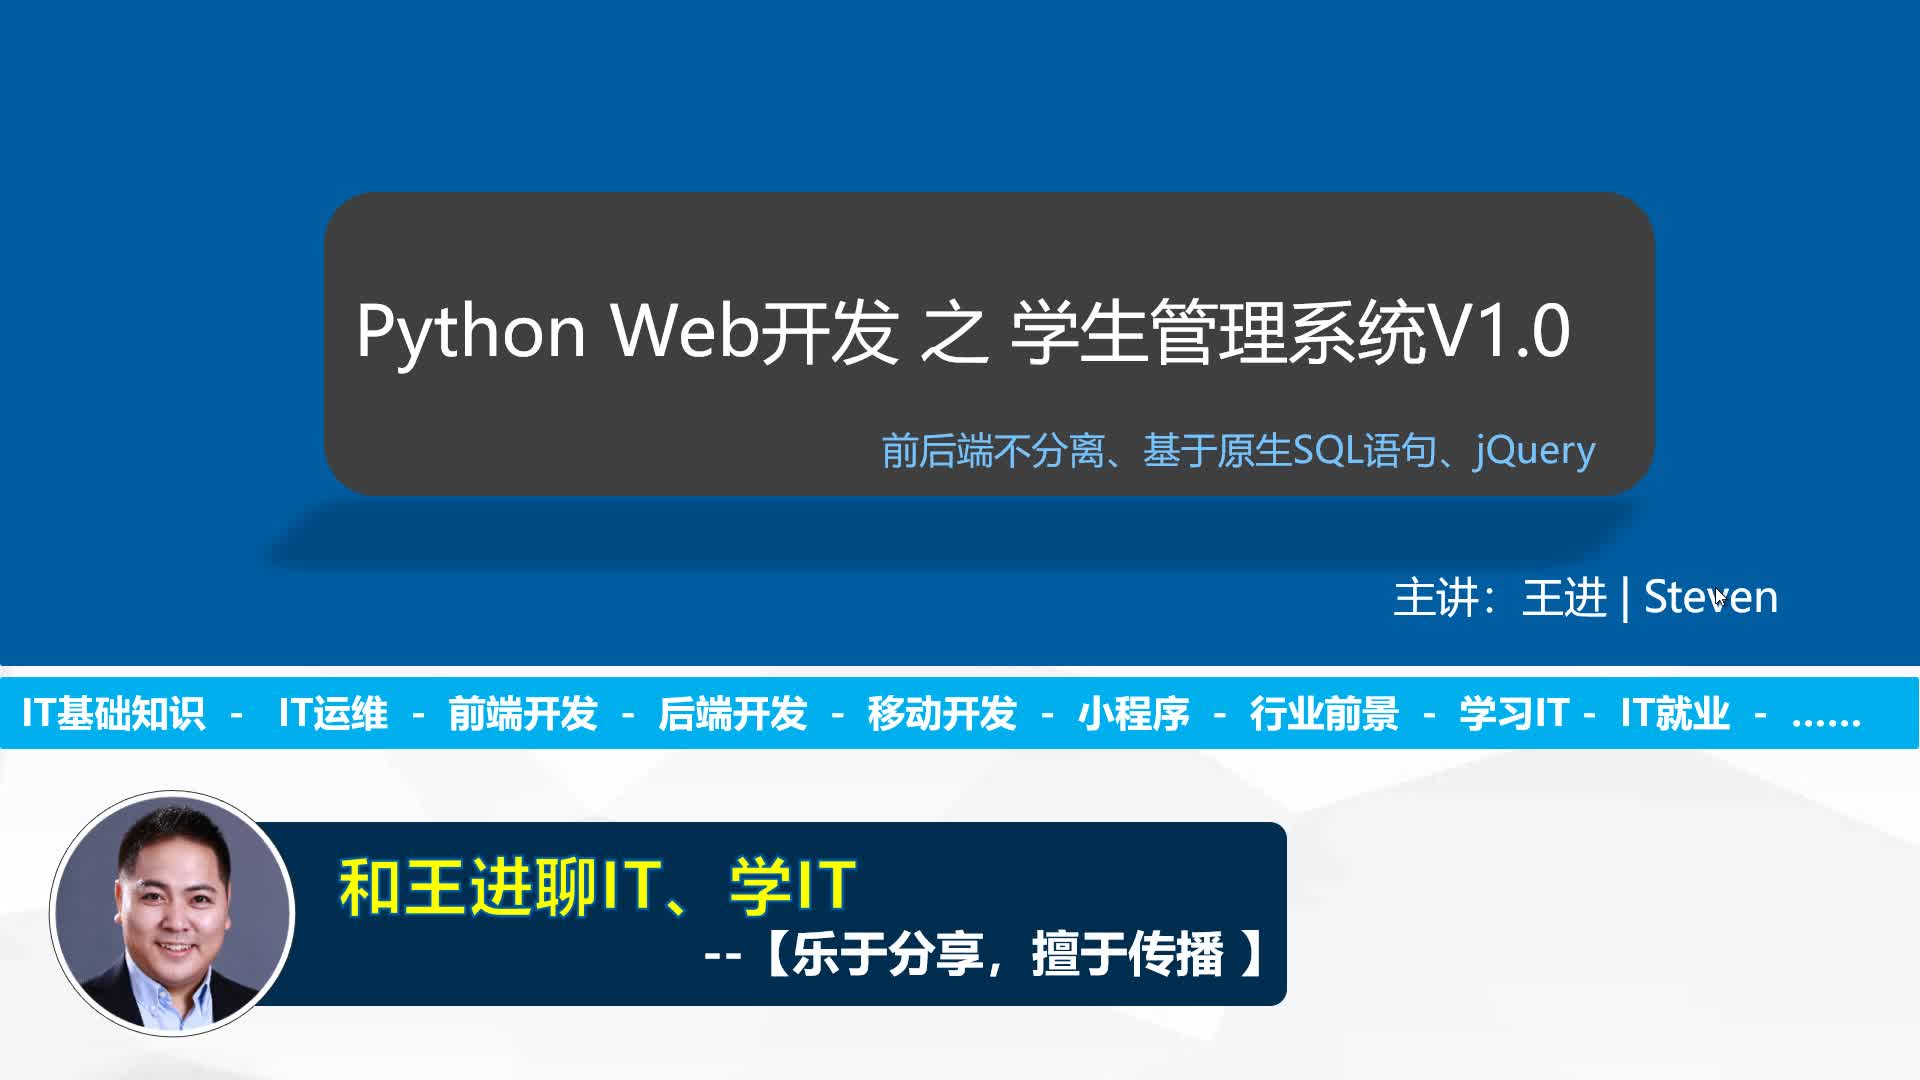 Python Web开发动手练习项目V1.0 学生管理系统